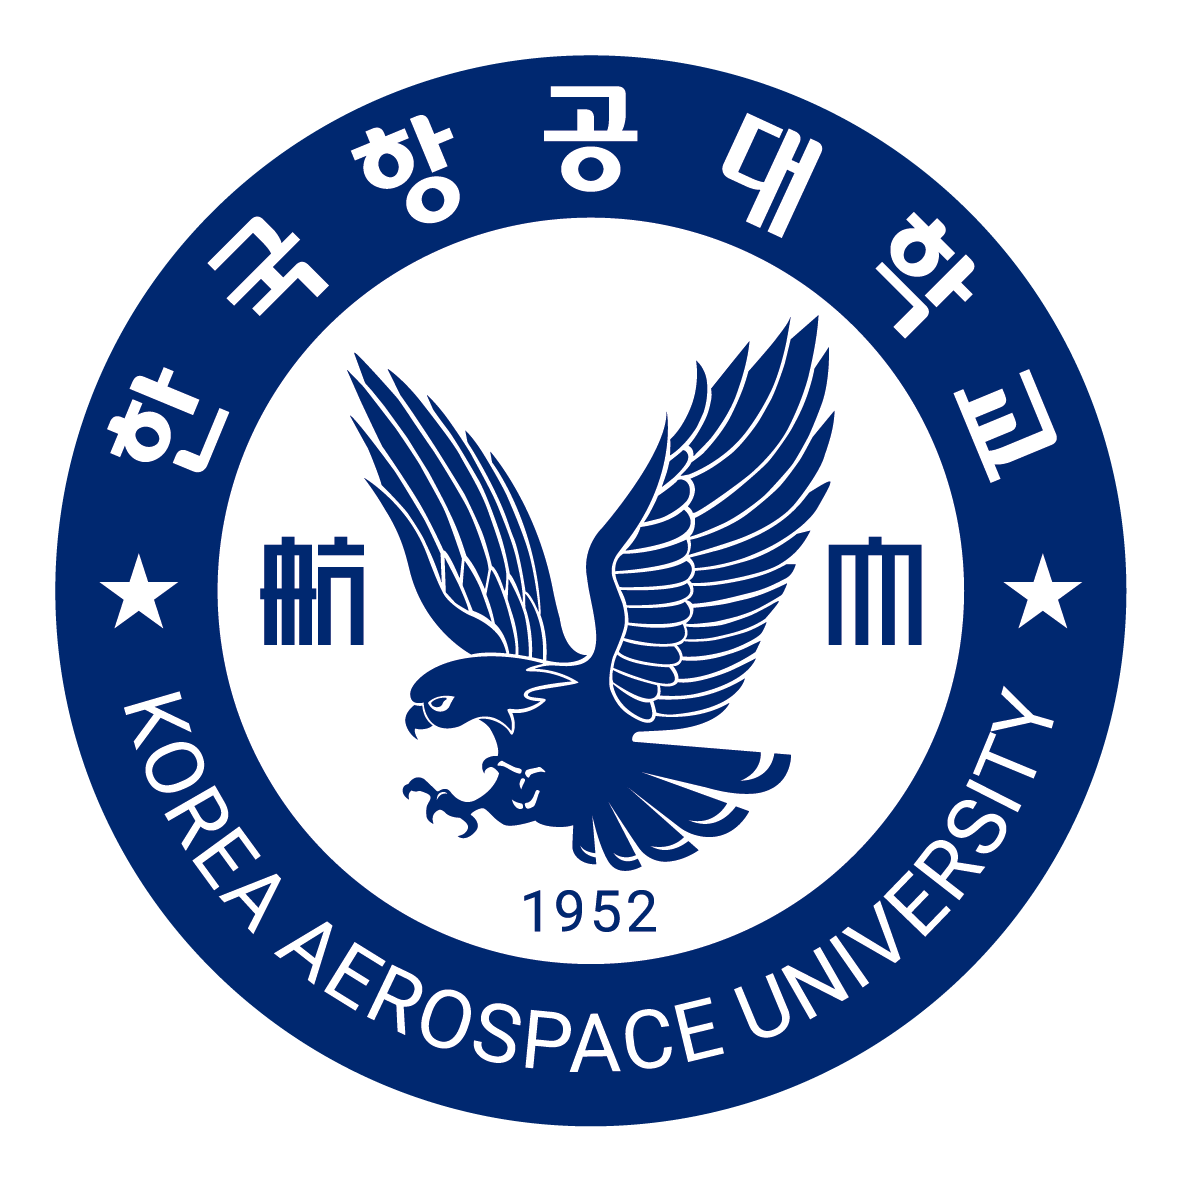 KOREA AEROSPACE UNIVERSITY